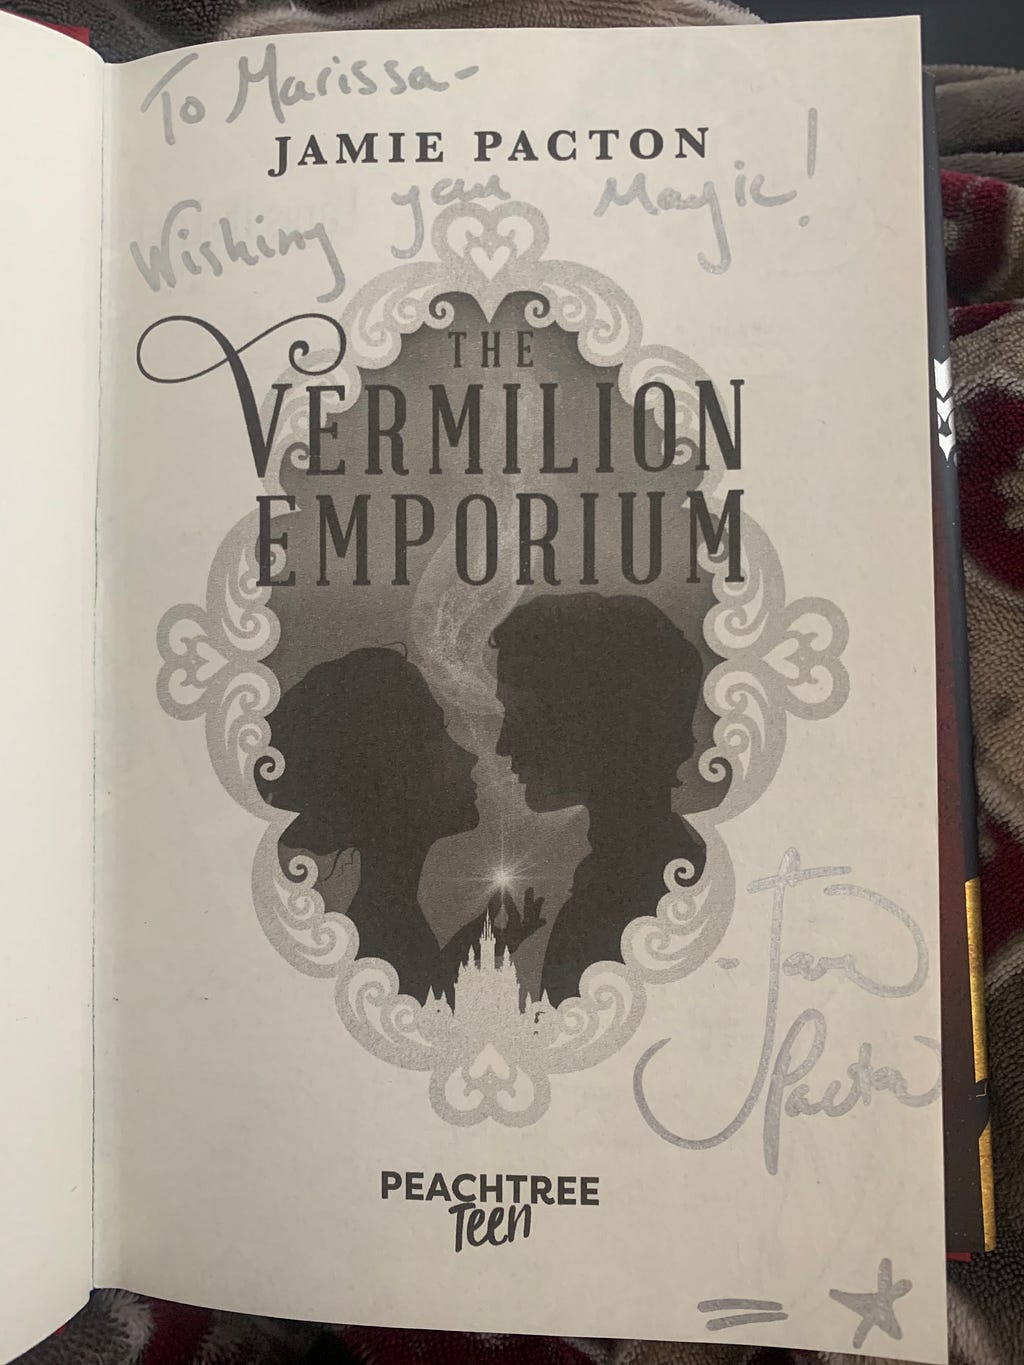 Signed copy of the Vermilion Emporium by Jamie Pacton